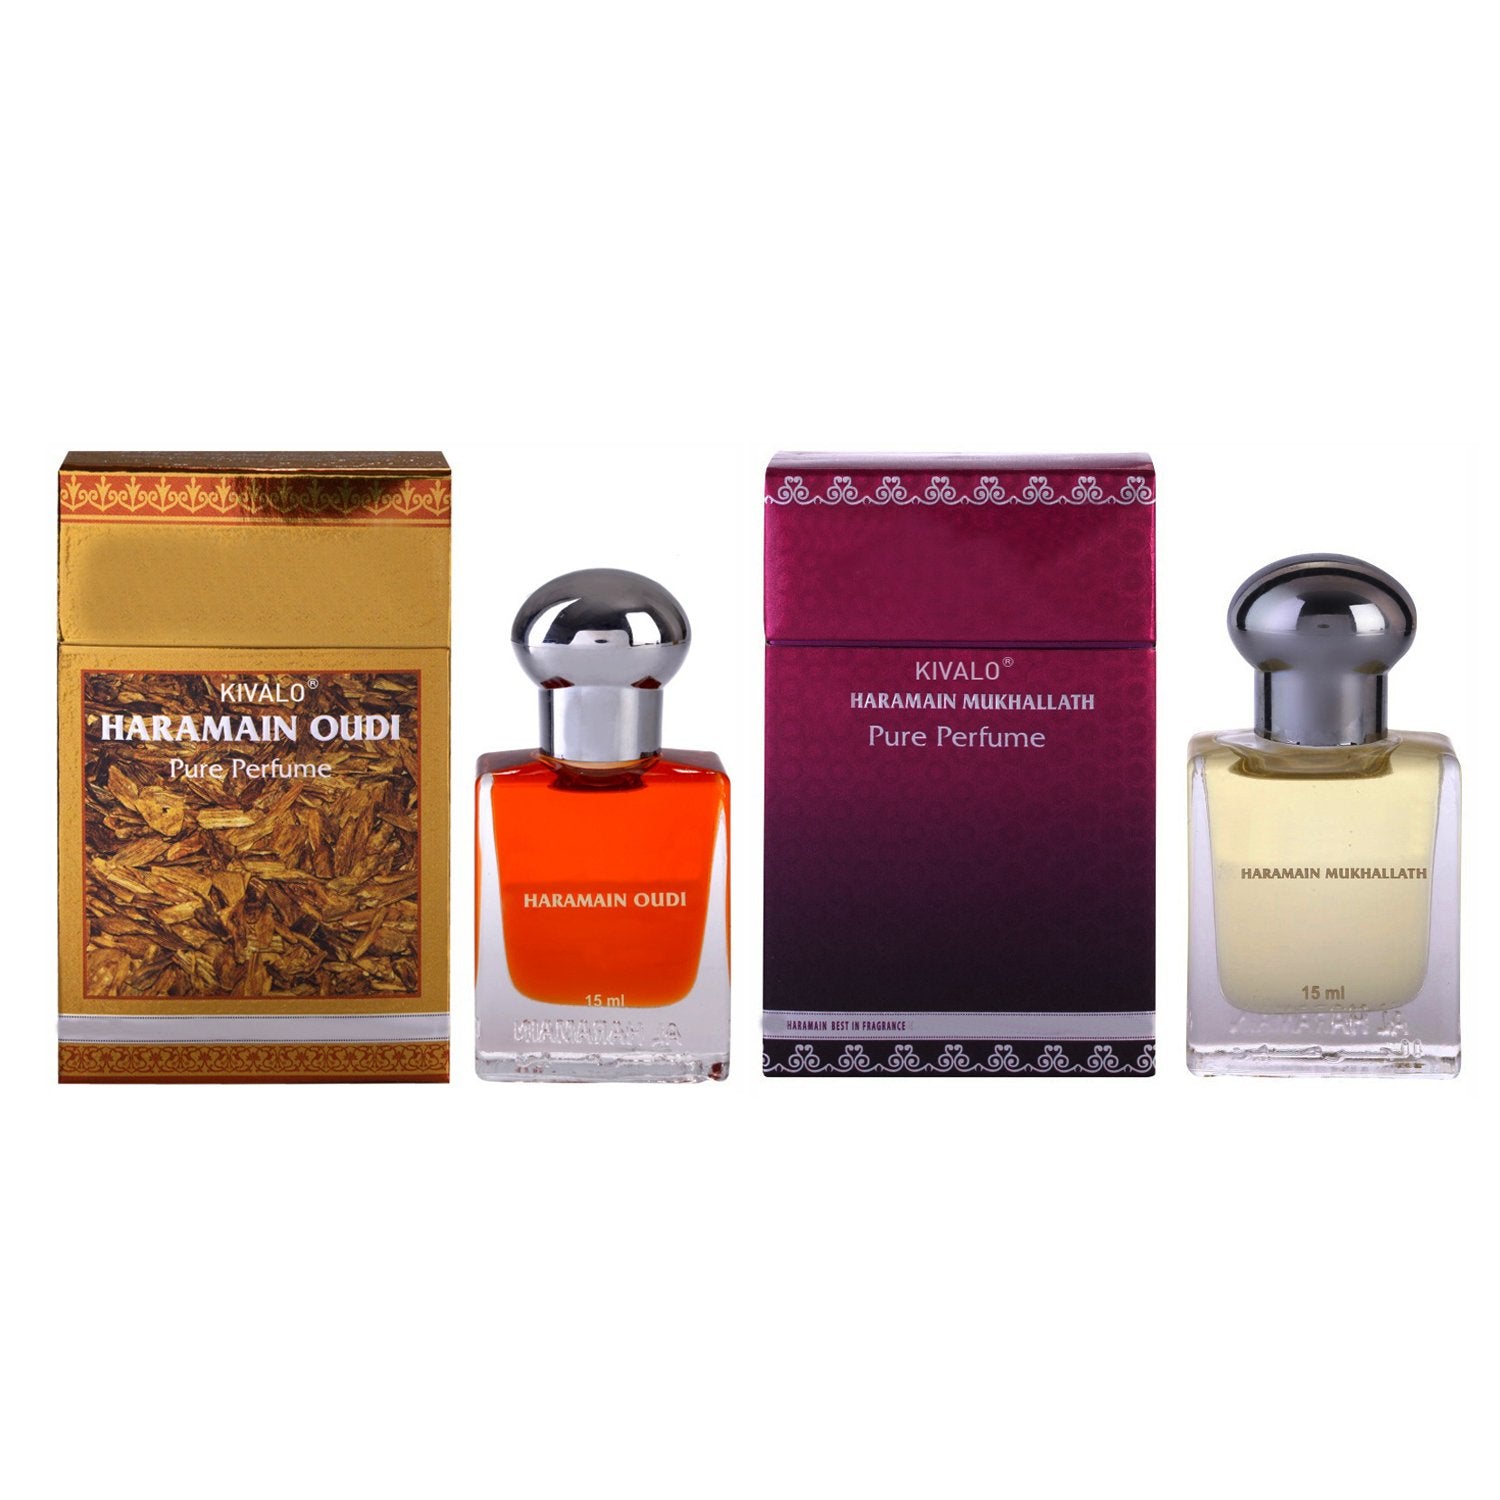 Al Haramain Oudi & Mukhallath Fragrance Pure Original Roll on Perfume Oil Pack of 2 (Attar) - 2 x 15 ml